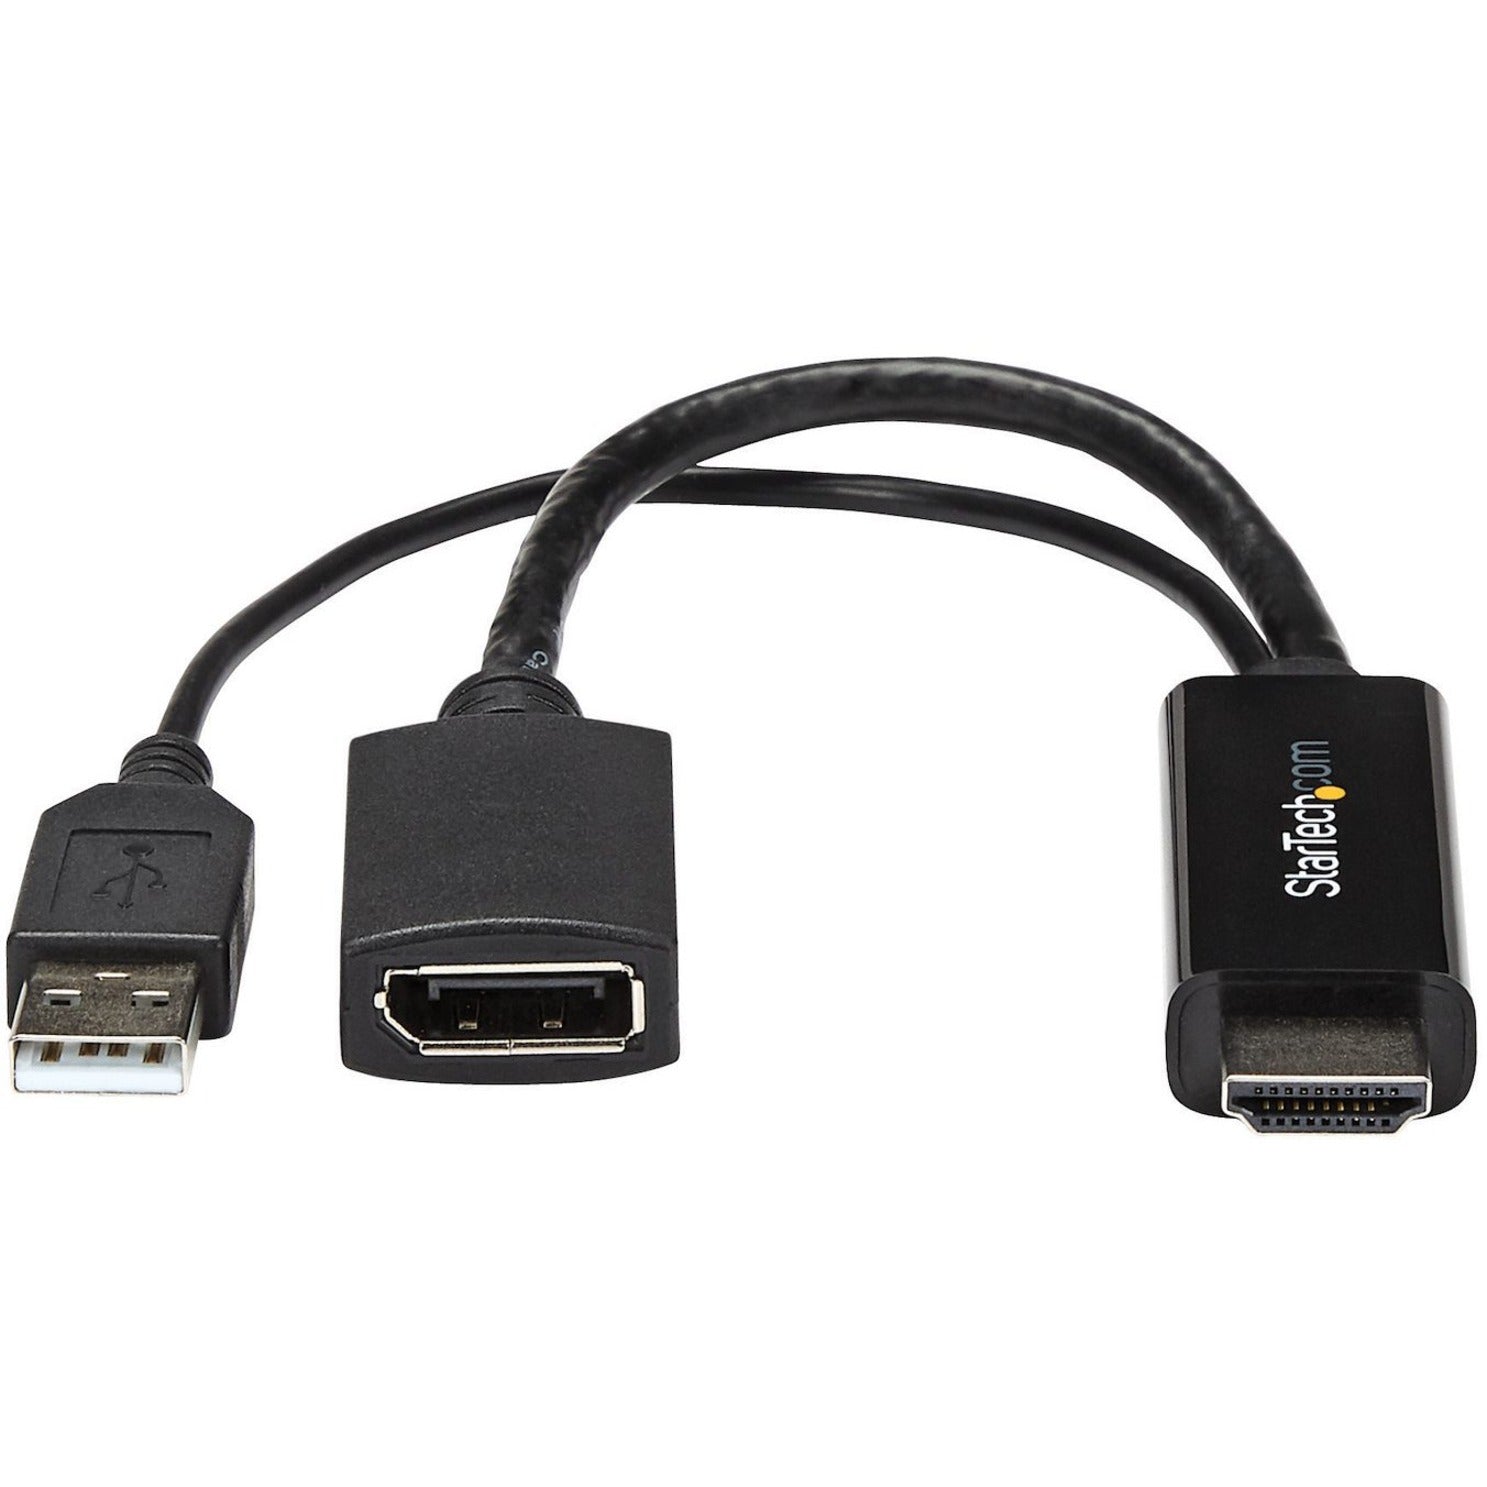 StarTech.com HD2DP HDMI vers DisplayPort Convertisseur- HDMI vers adaptateur DP avec alimentation USB - 4K Facile Plug-and-Play Adaptateur vidéo